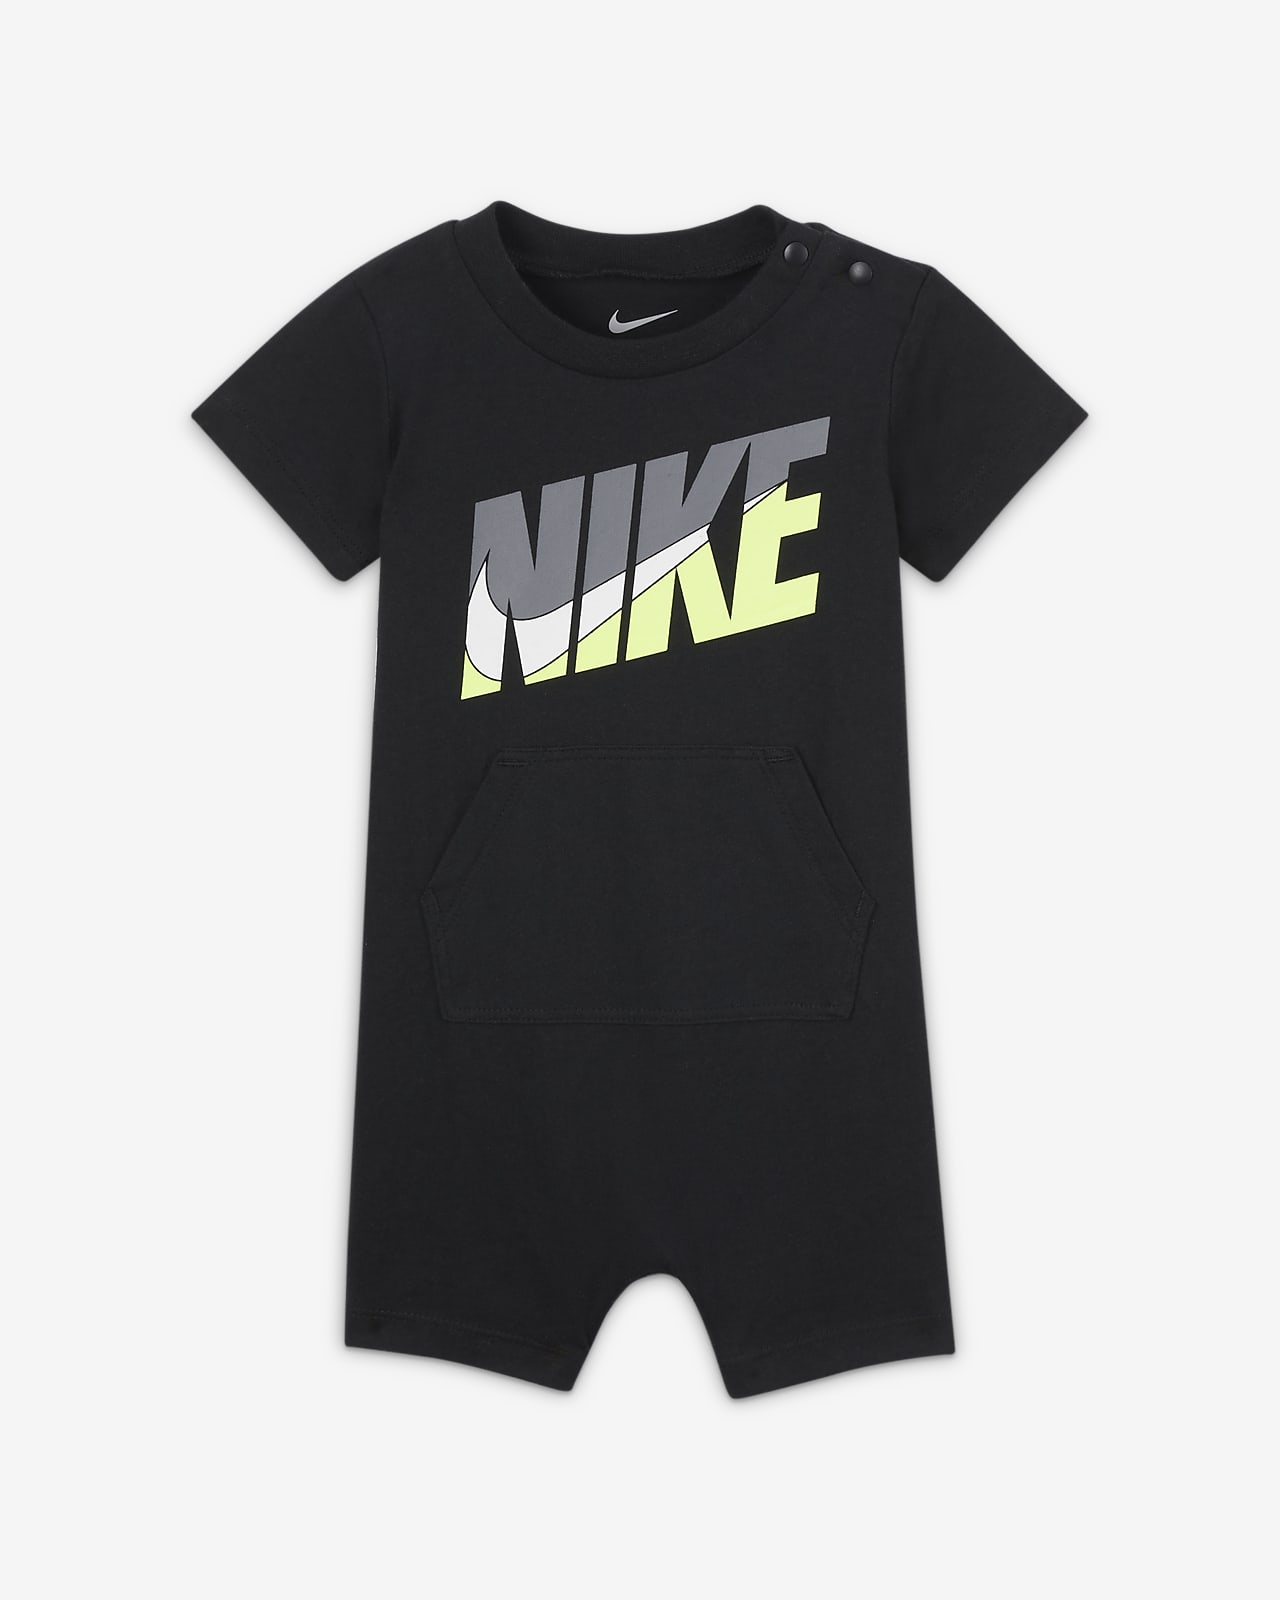 Nike Baby (0-9M) Romper